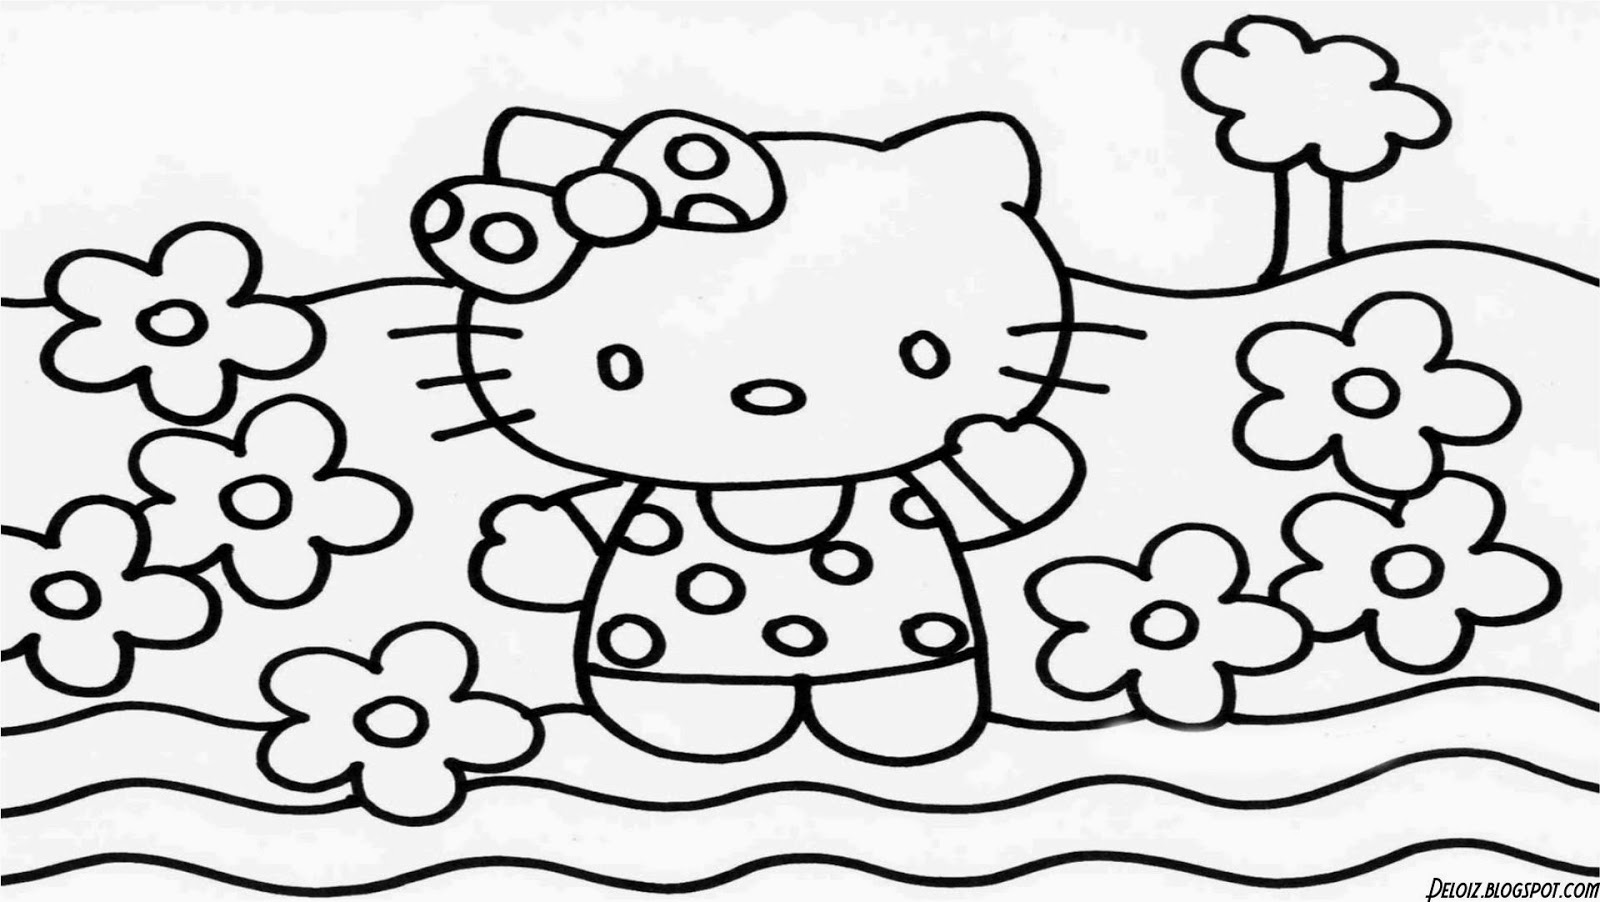 Download 96 Gambar Hello Kitty Yang Belum Diwarnai Paling Baru Gratis